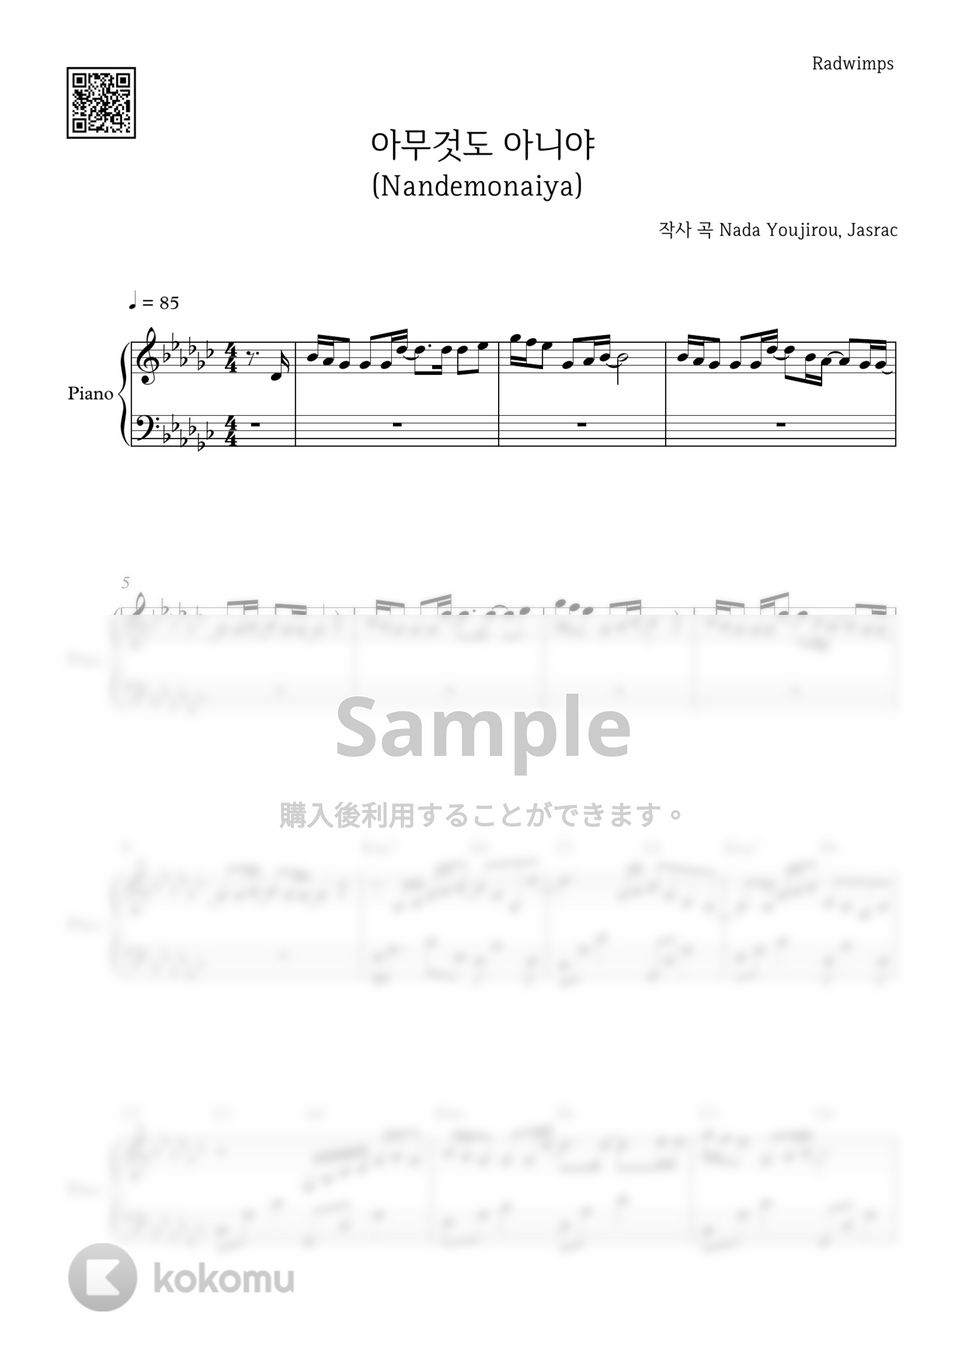 RADWIMPS - なんでもないや by PIANOiNU